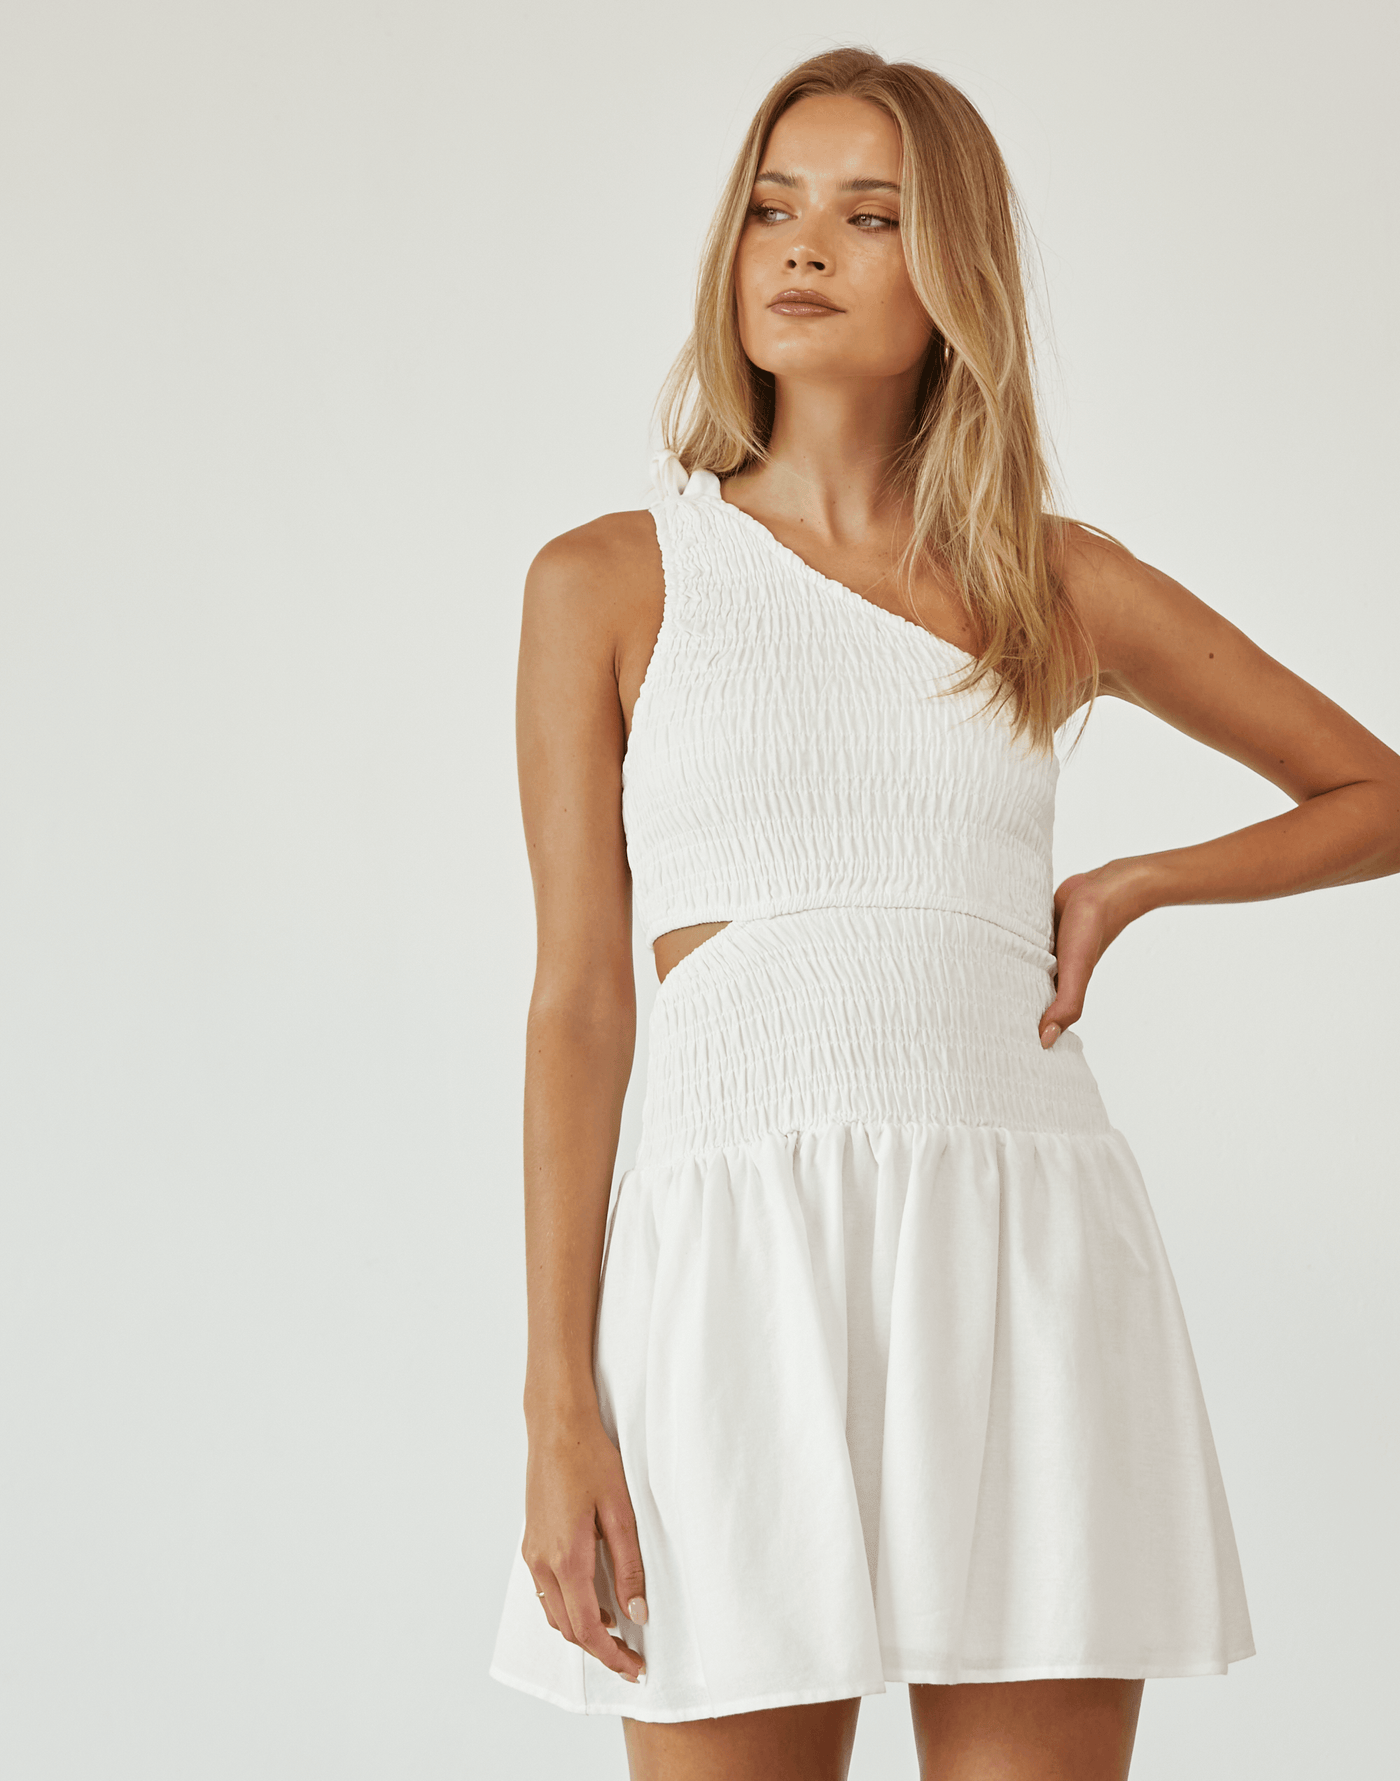 Mailee Mini Dress (White) - One Shoulder Mini Dress - Women's Dress - Charcoal Clothing